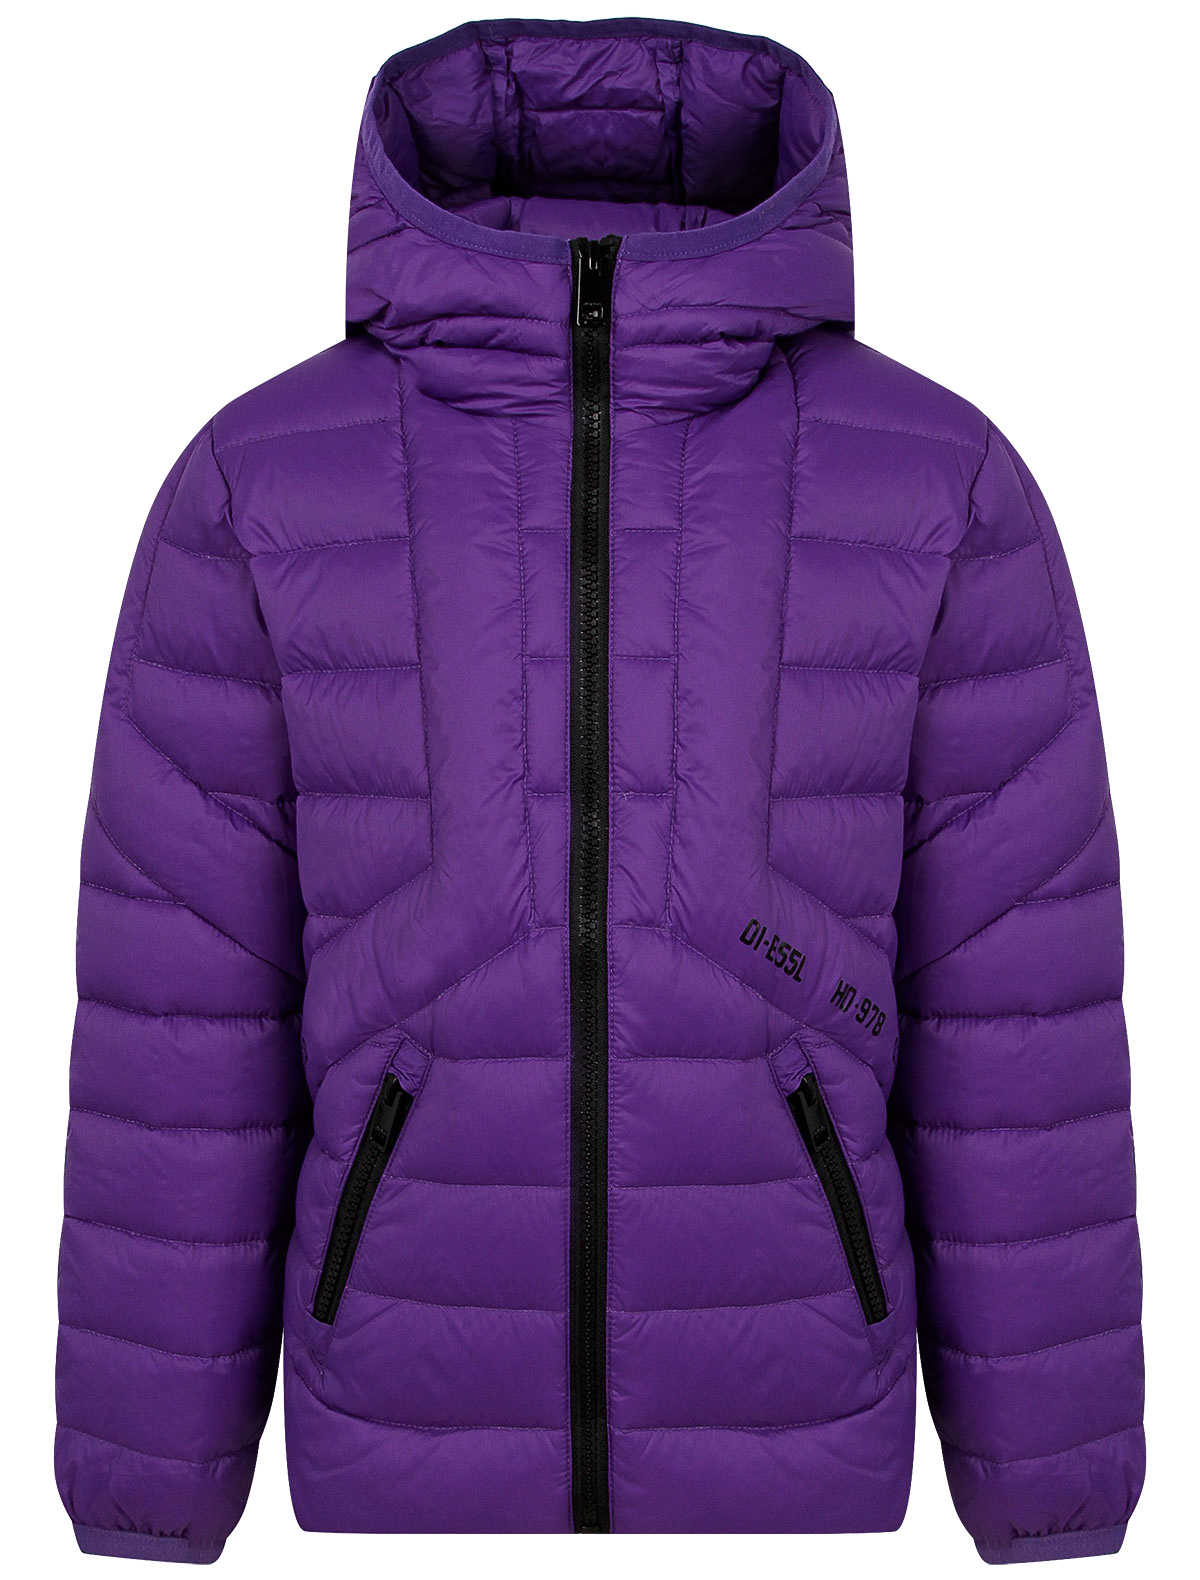 Куртка Diesel 2345493, цвет фиолетовый, размер 6 1074529181136 - фото 1